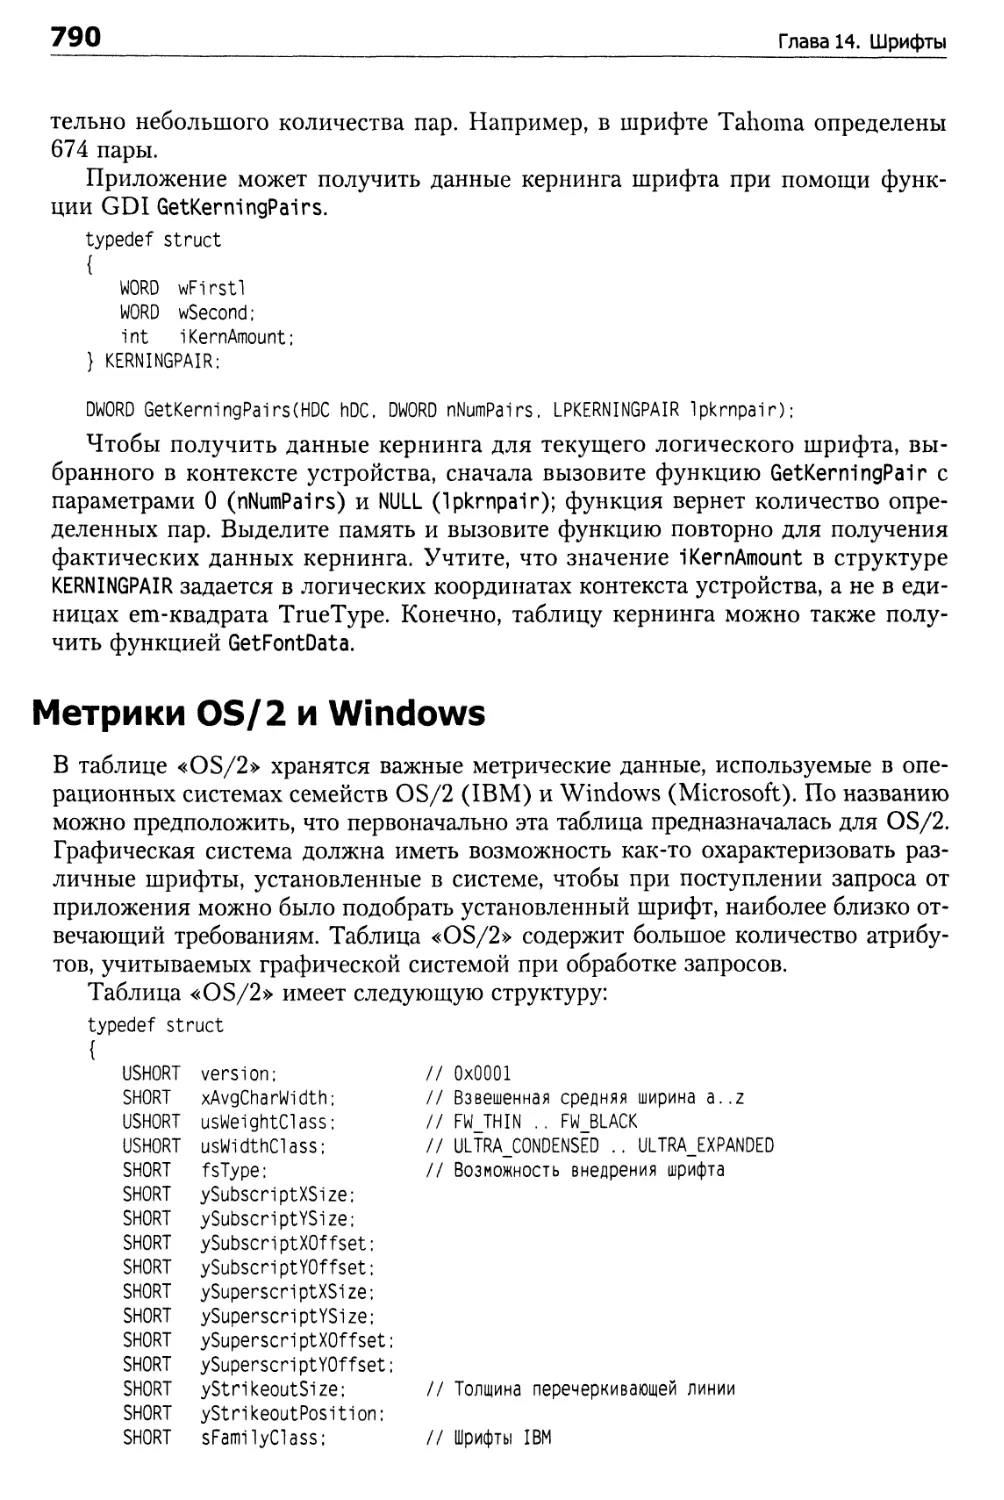 Метрики OS/2 и Windows